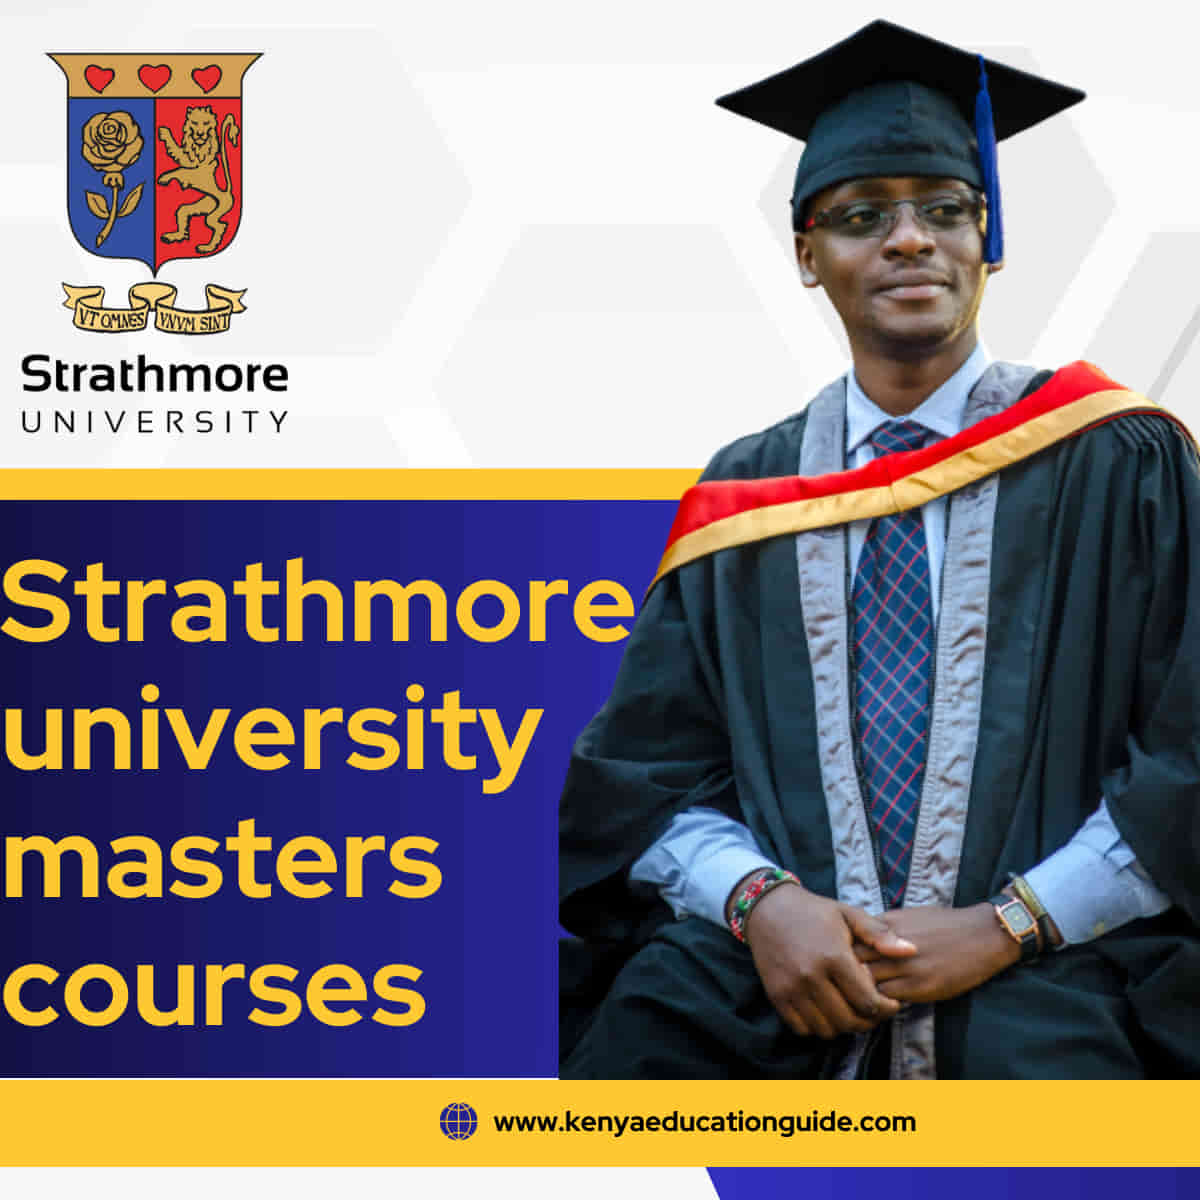 Strathmore university masters courses